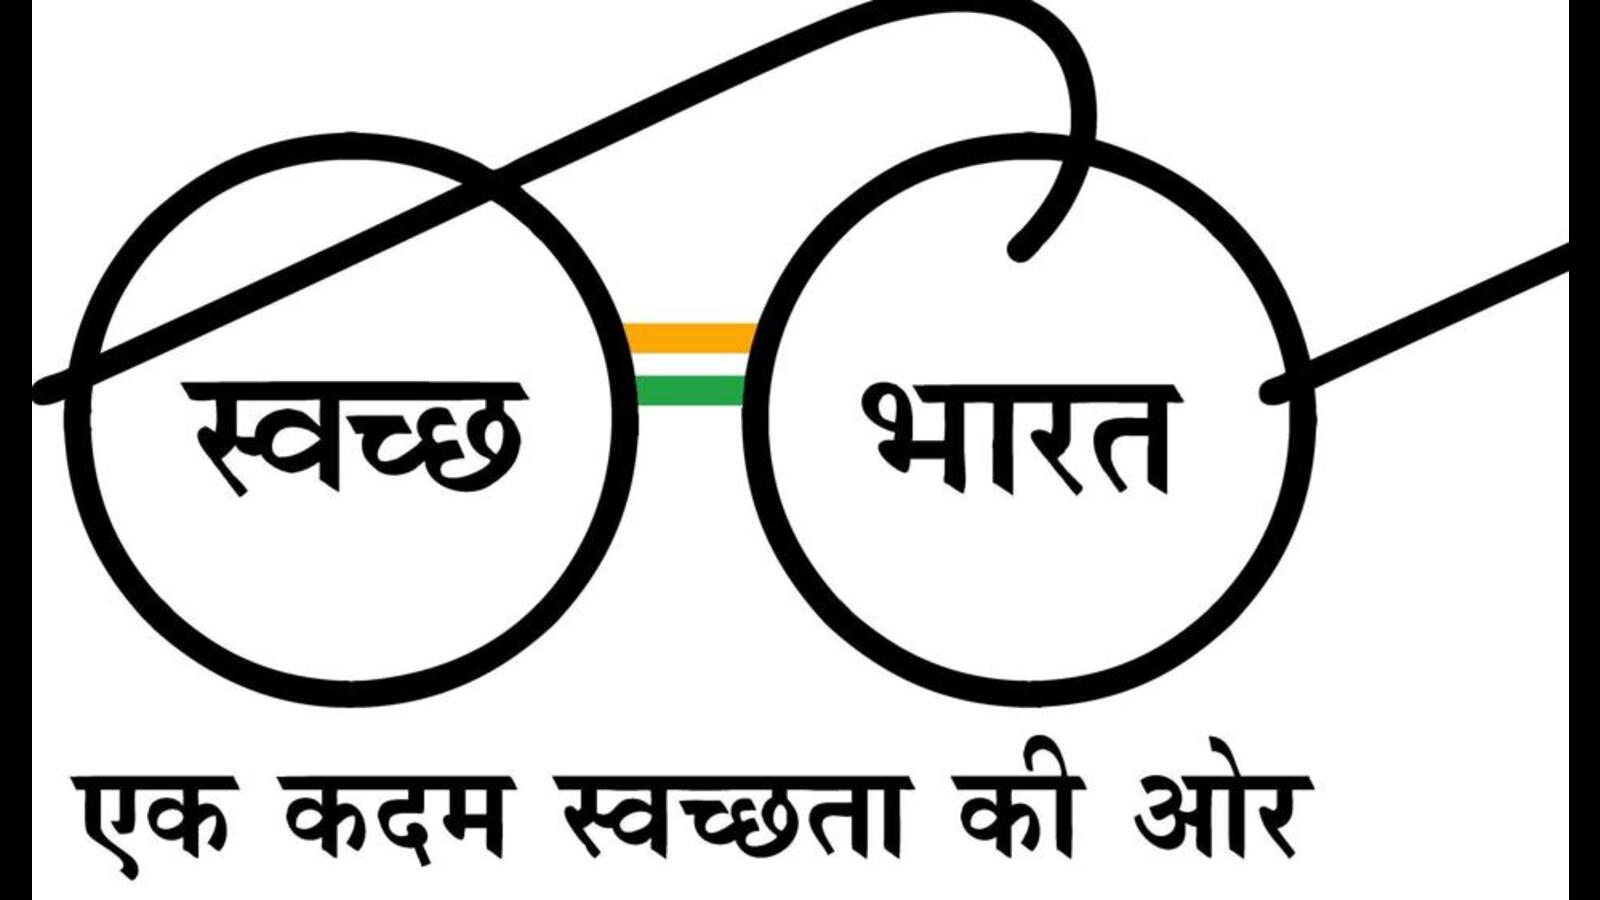 Swachh Bharat Abhiyan : A remarkable transformation - MyGov Blogs